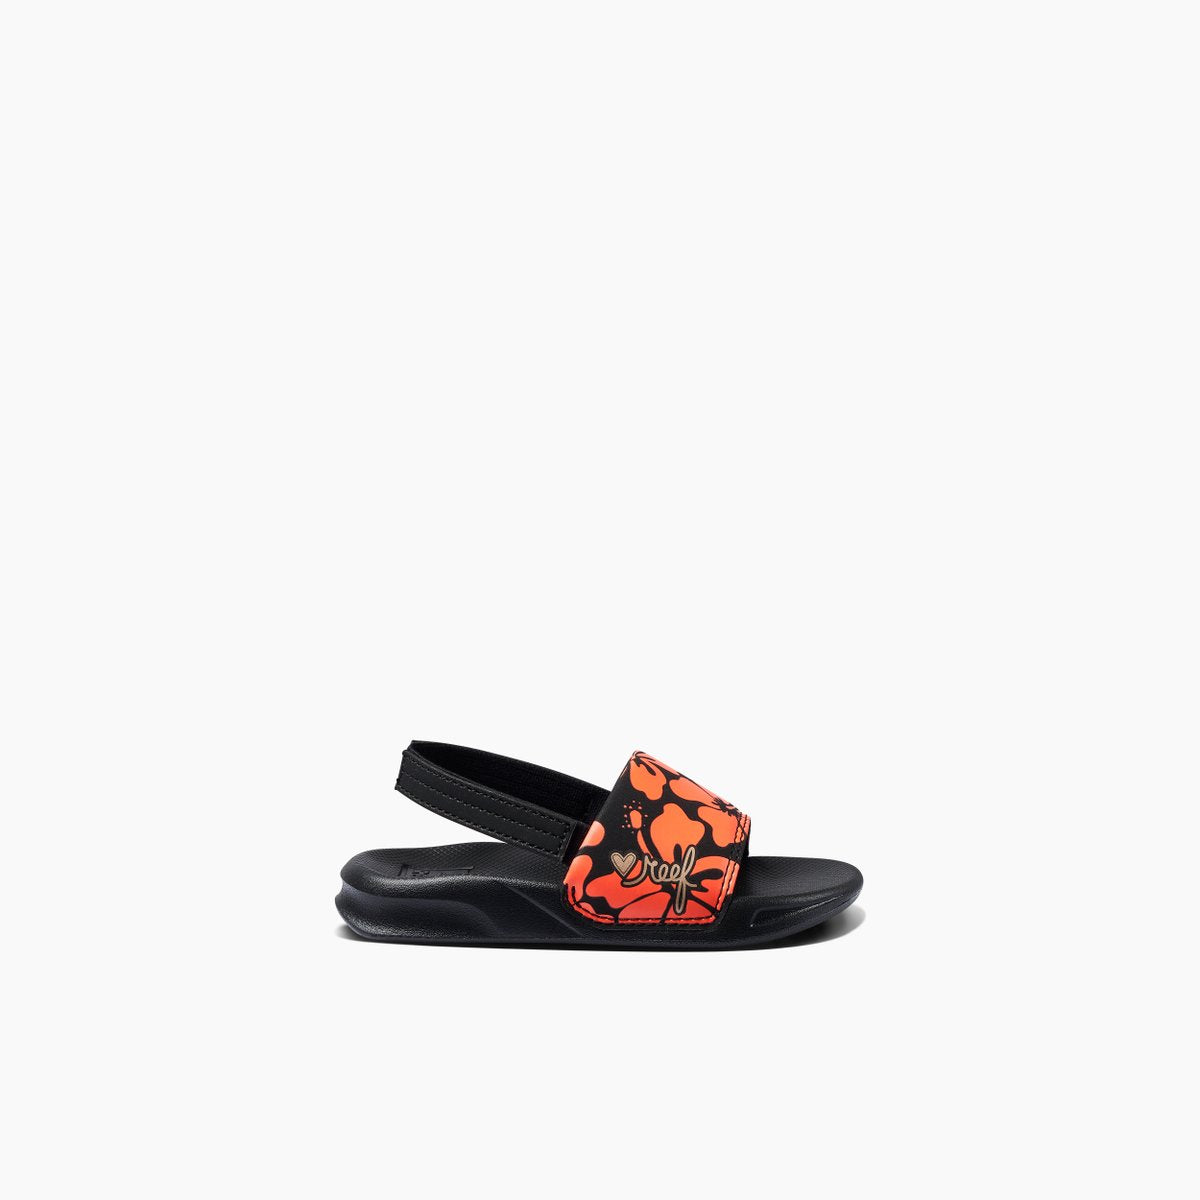 Little One Slide Sandals - Kids Sandals - Hibiscus Coral - ManGo Surfing